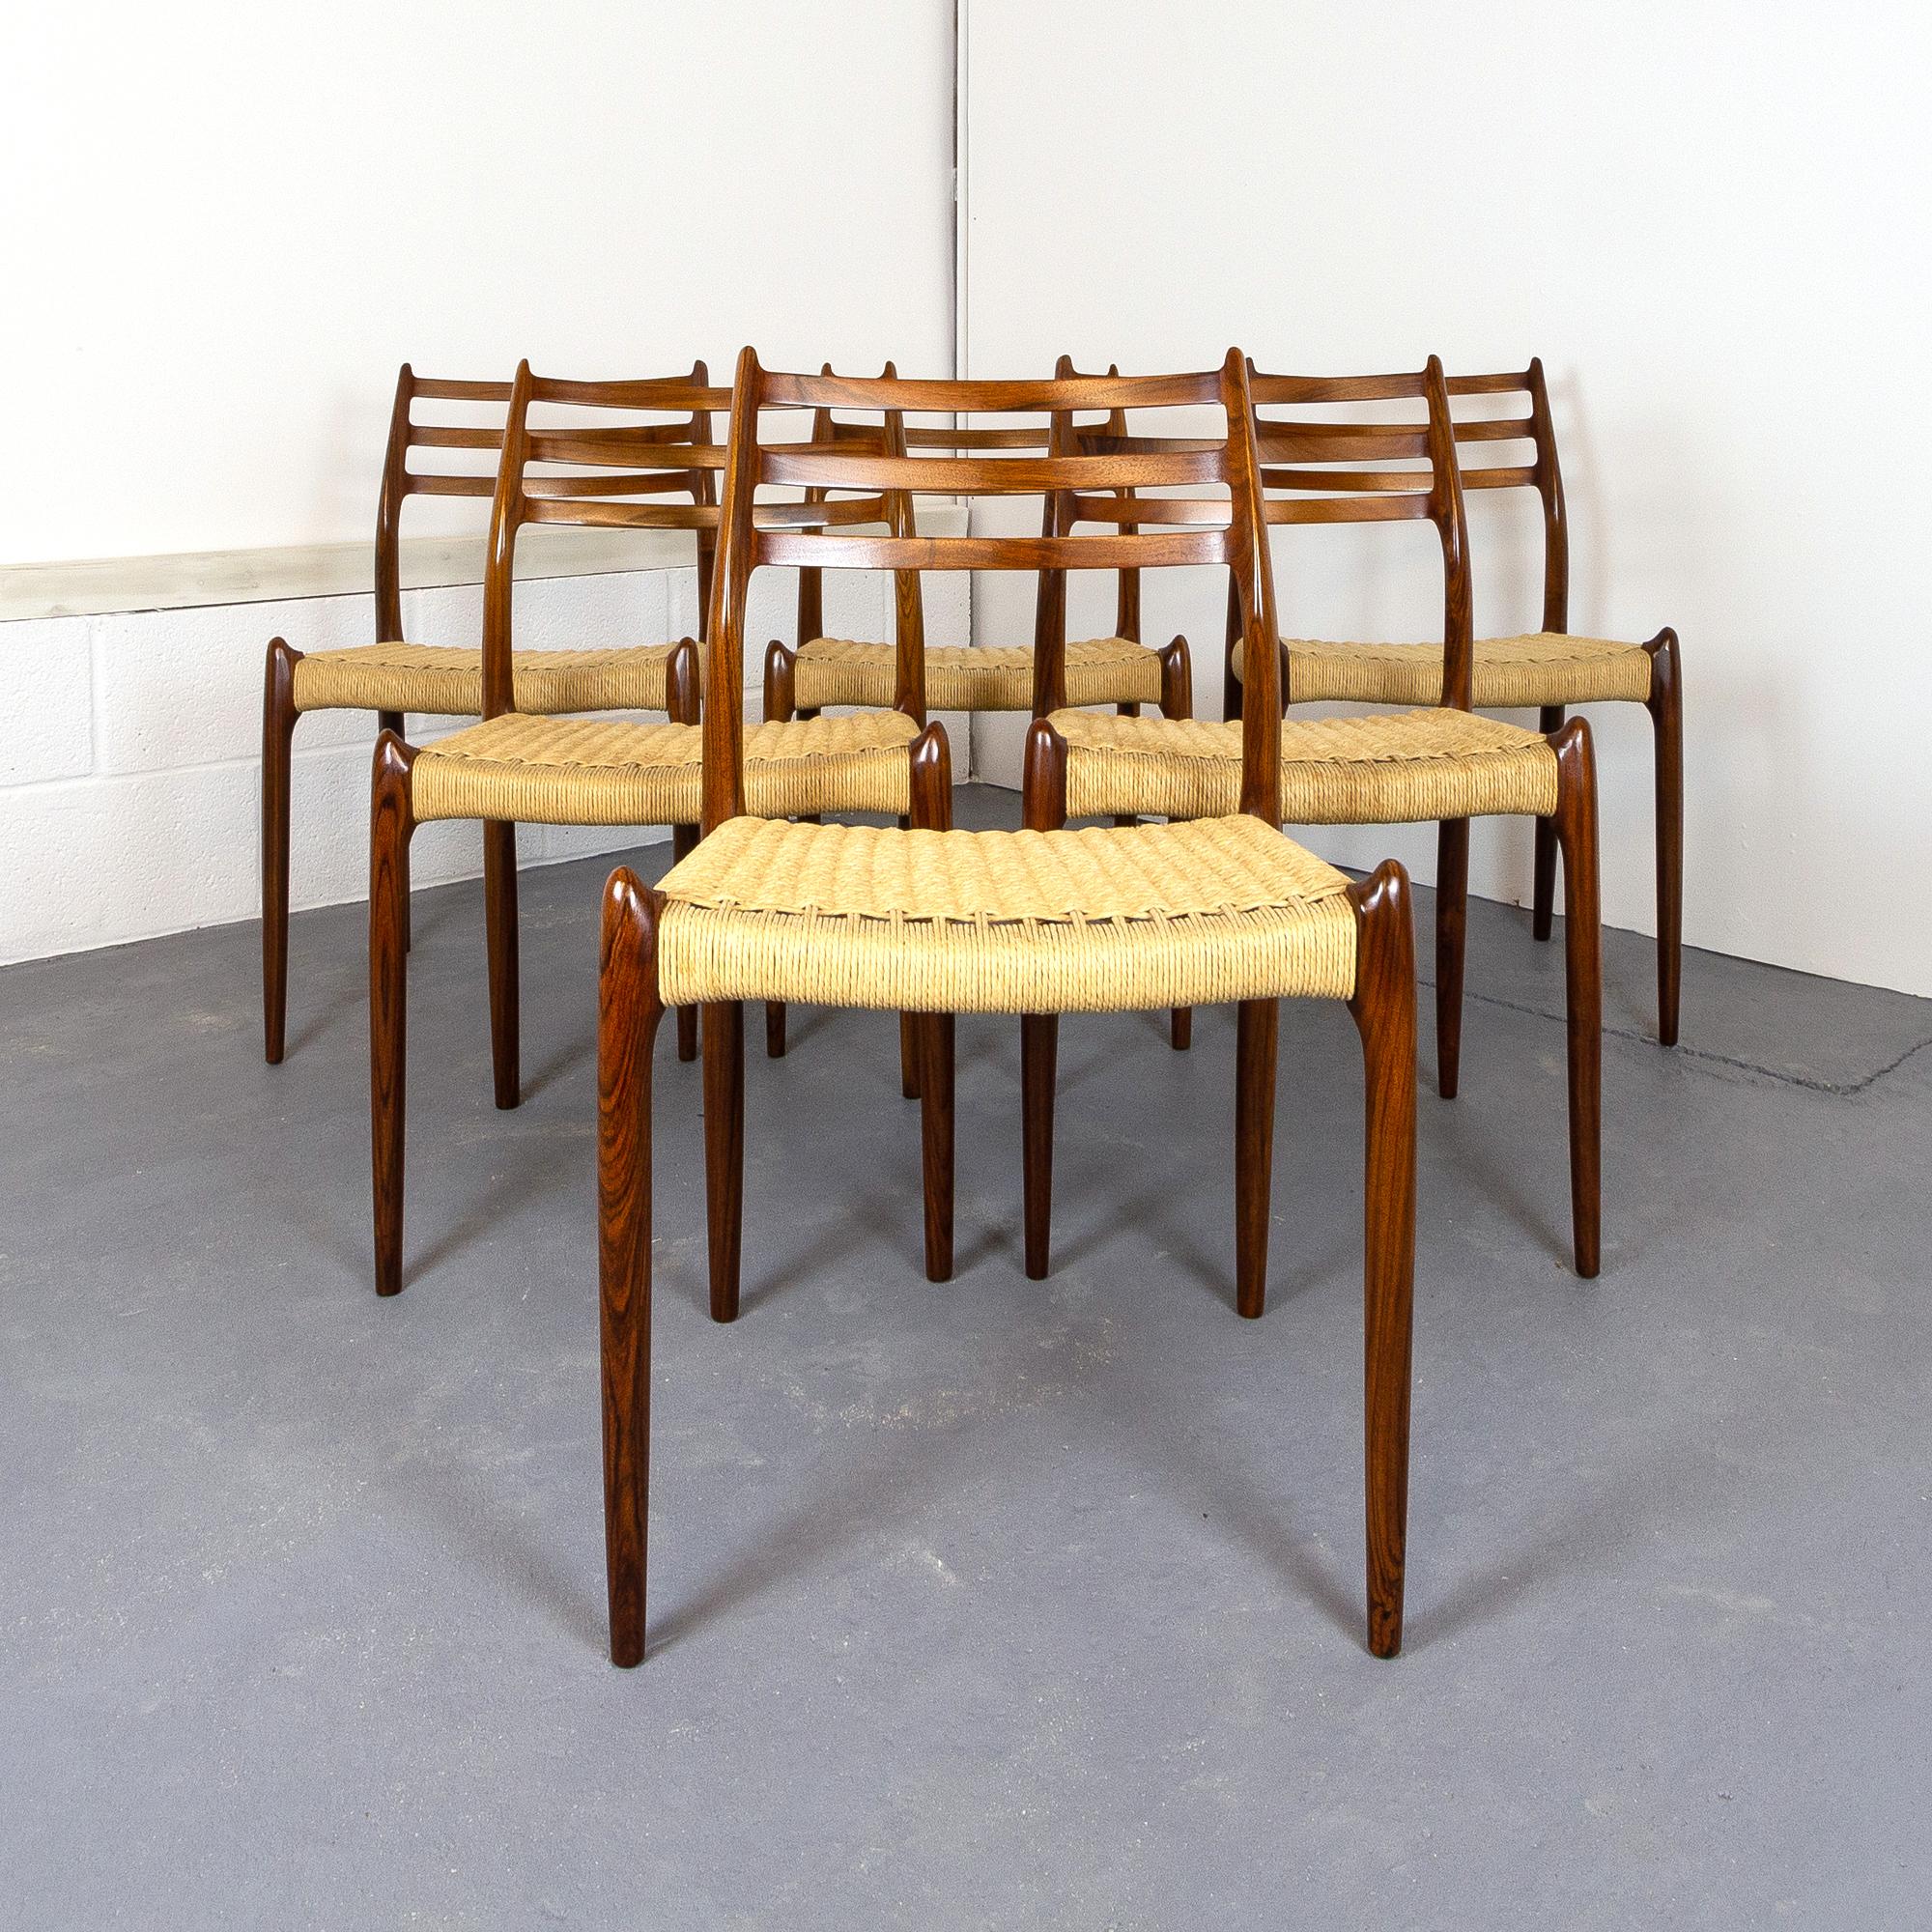 Niels Møller Model 78 Rosewood Papercord Chairs, Set of Six. Denmark 1960s (Papierkordel)